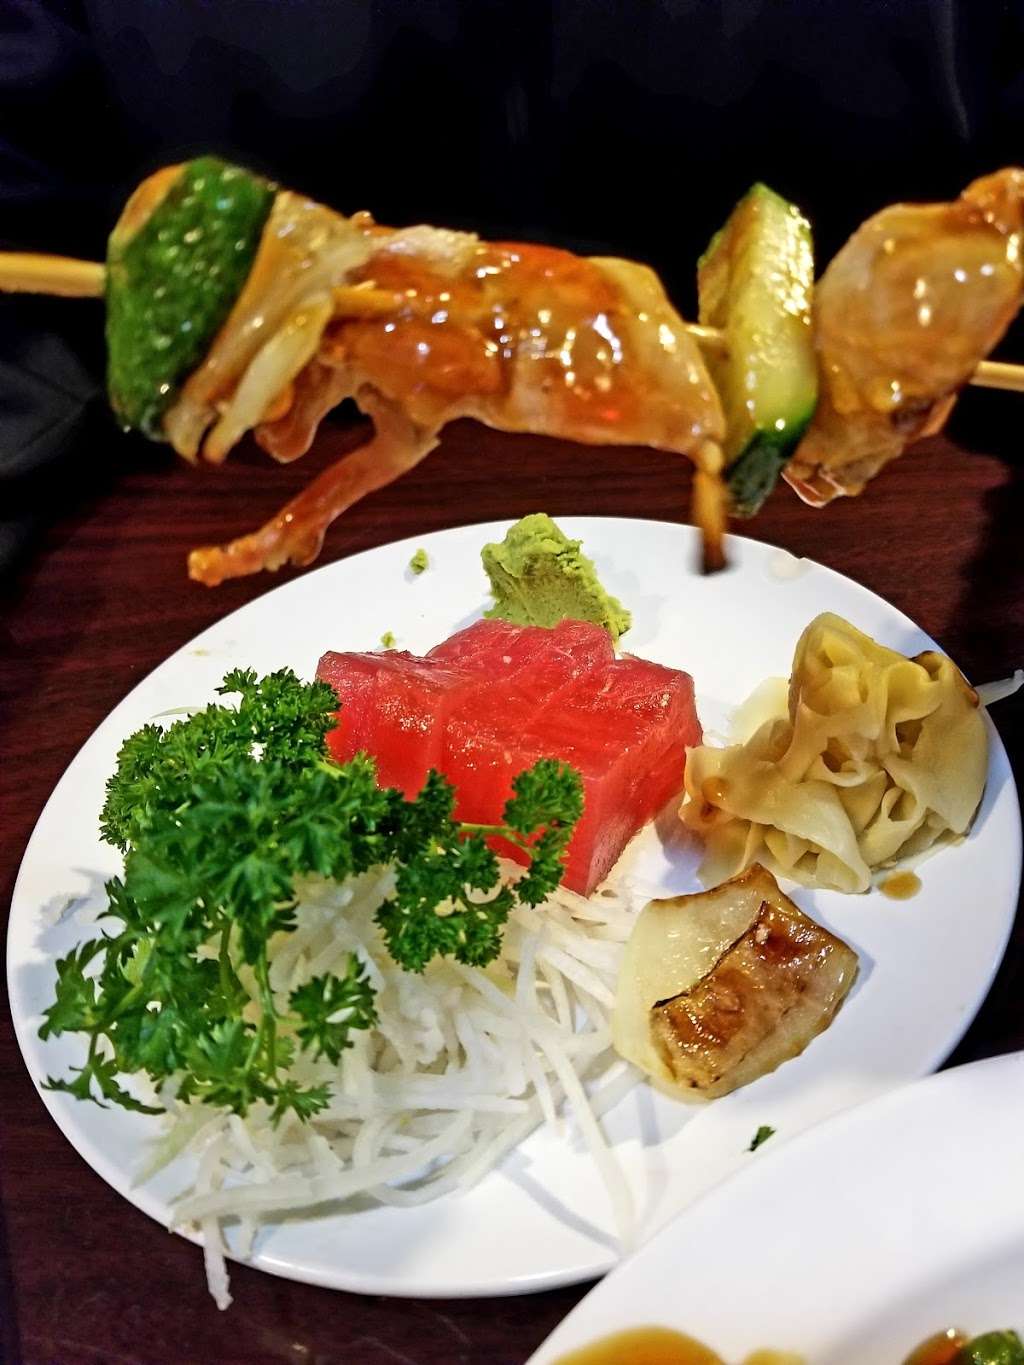 Okayama Sushi | 565 N 6th St, San Jose, CA 95112, USA | Phone: (408) 289-9508